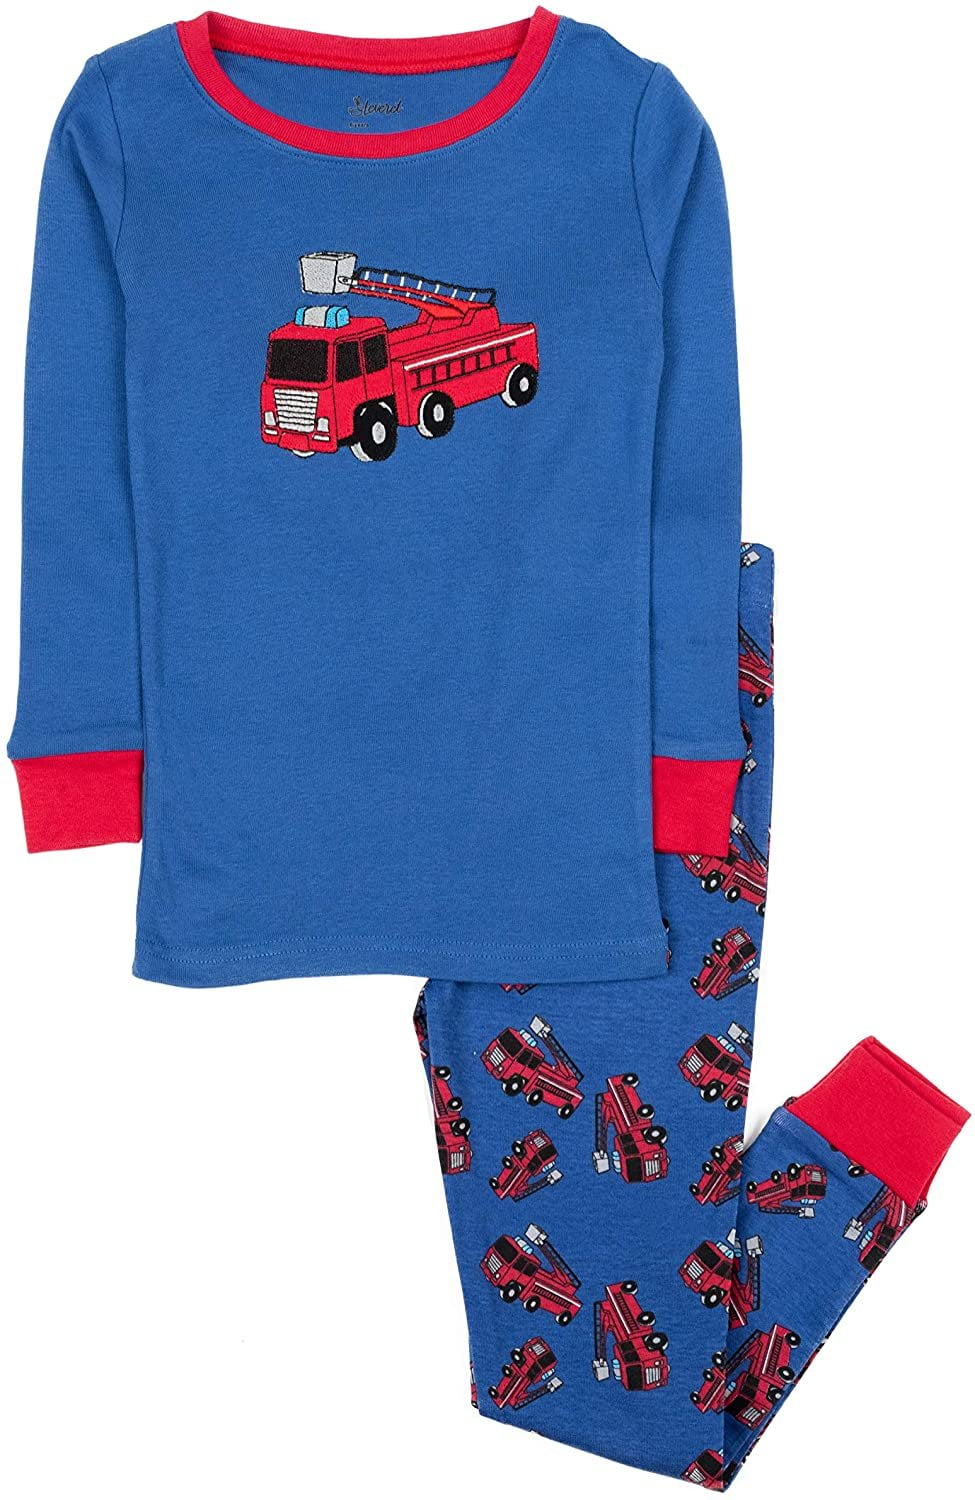 Pyjamas for Boys Firetruck Fire Engine Pjs Set for Kids Cotton Long Sleeve Sleepwear for Toddler Boys 1-7 Years 